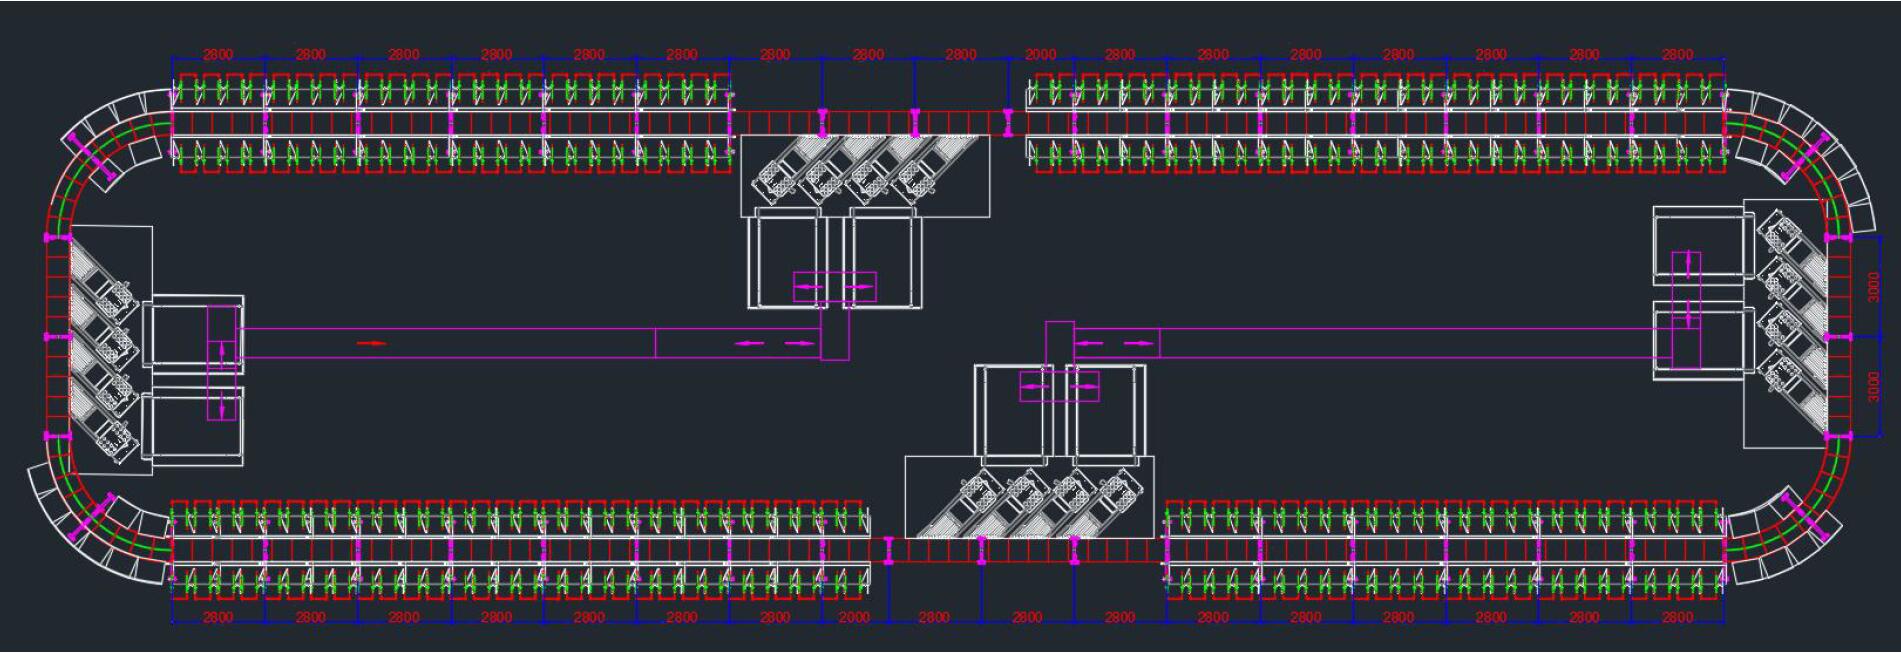 general layout drawing of crossbelt sortation system for yunda express